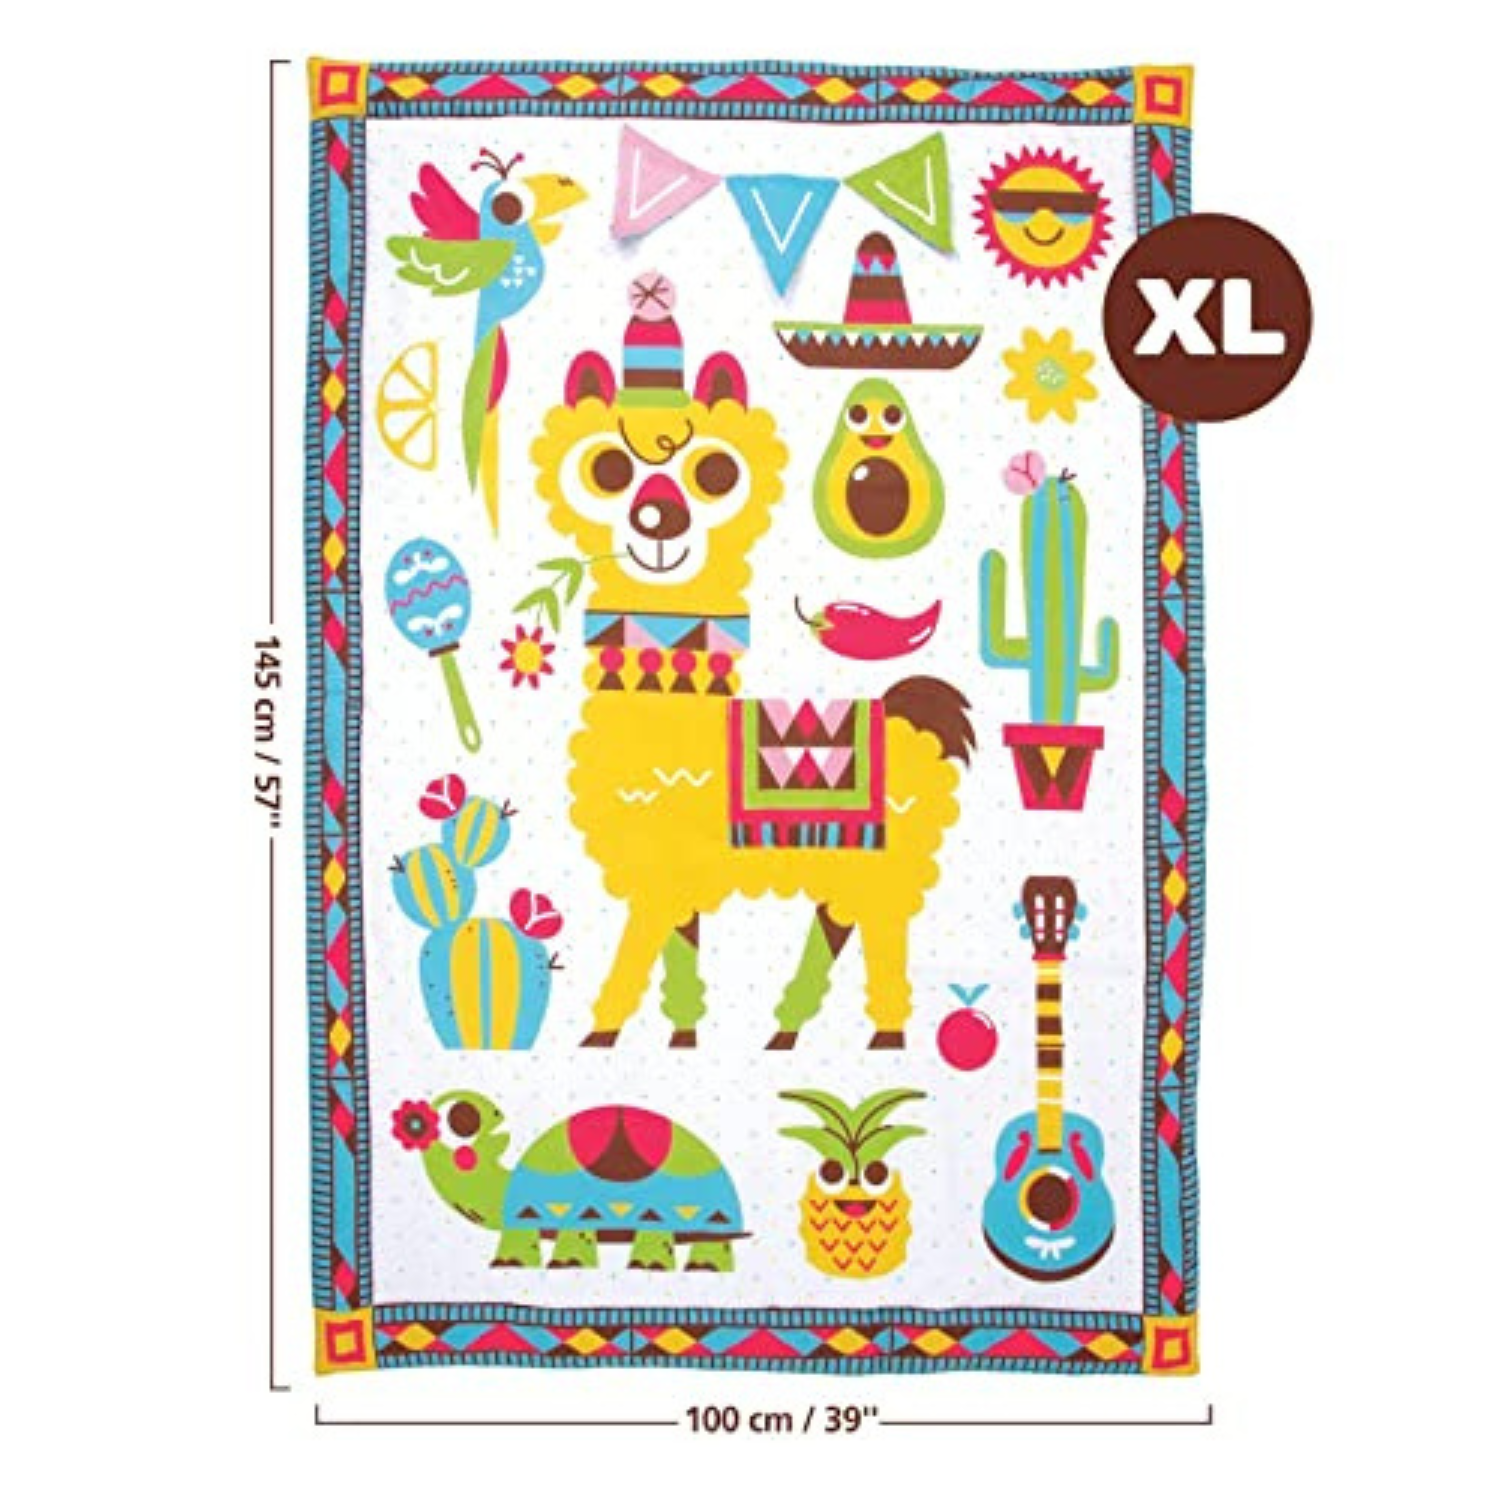 Yookidoo - Fiesta Playmat to Bag - Playmat - Age: +0M - +12M